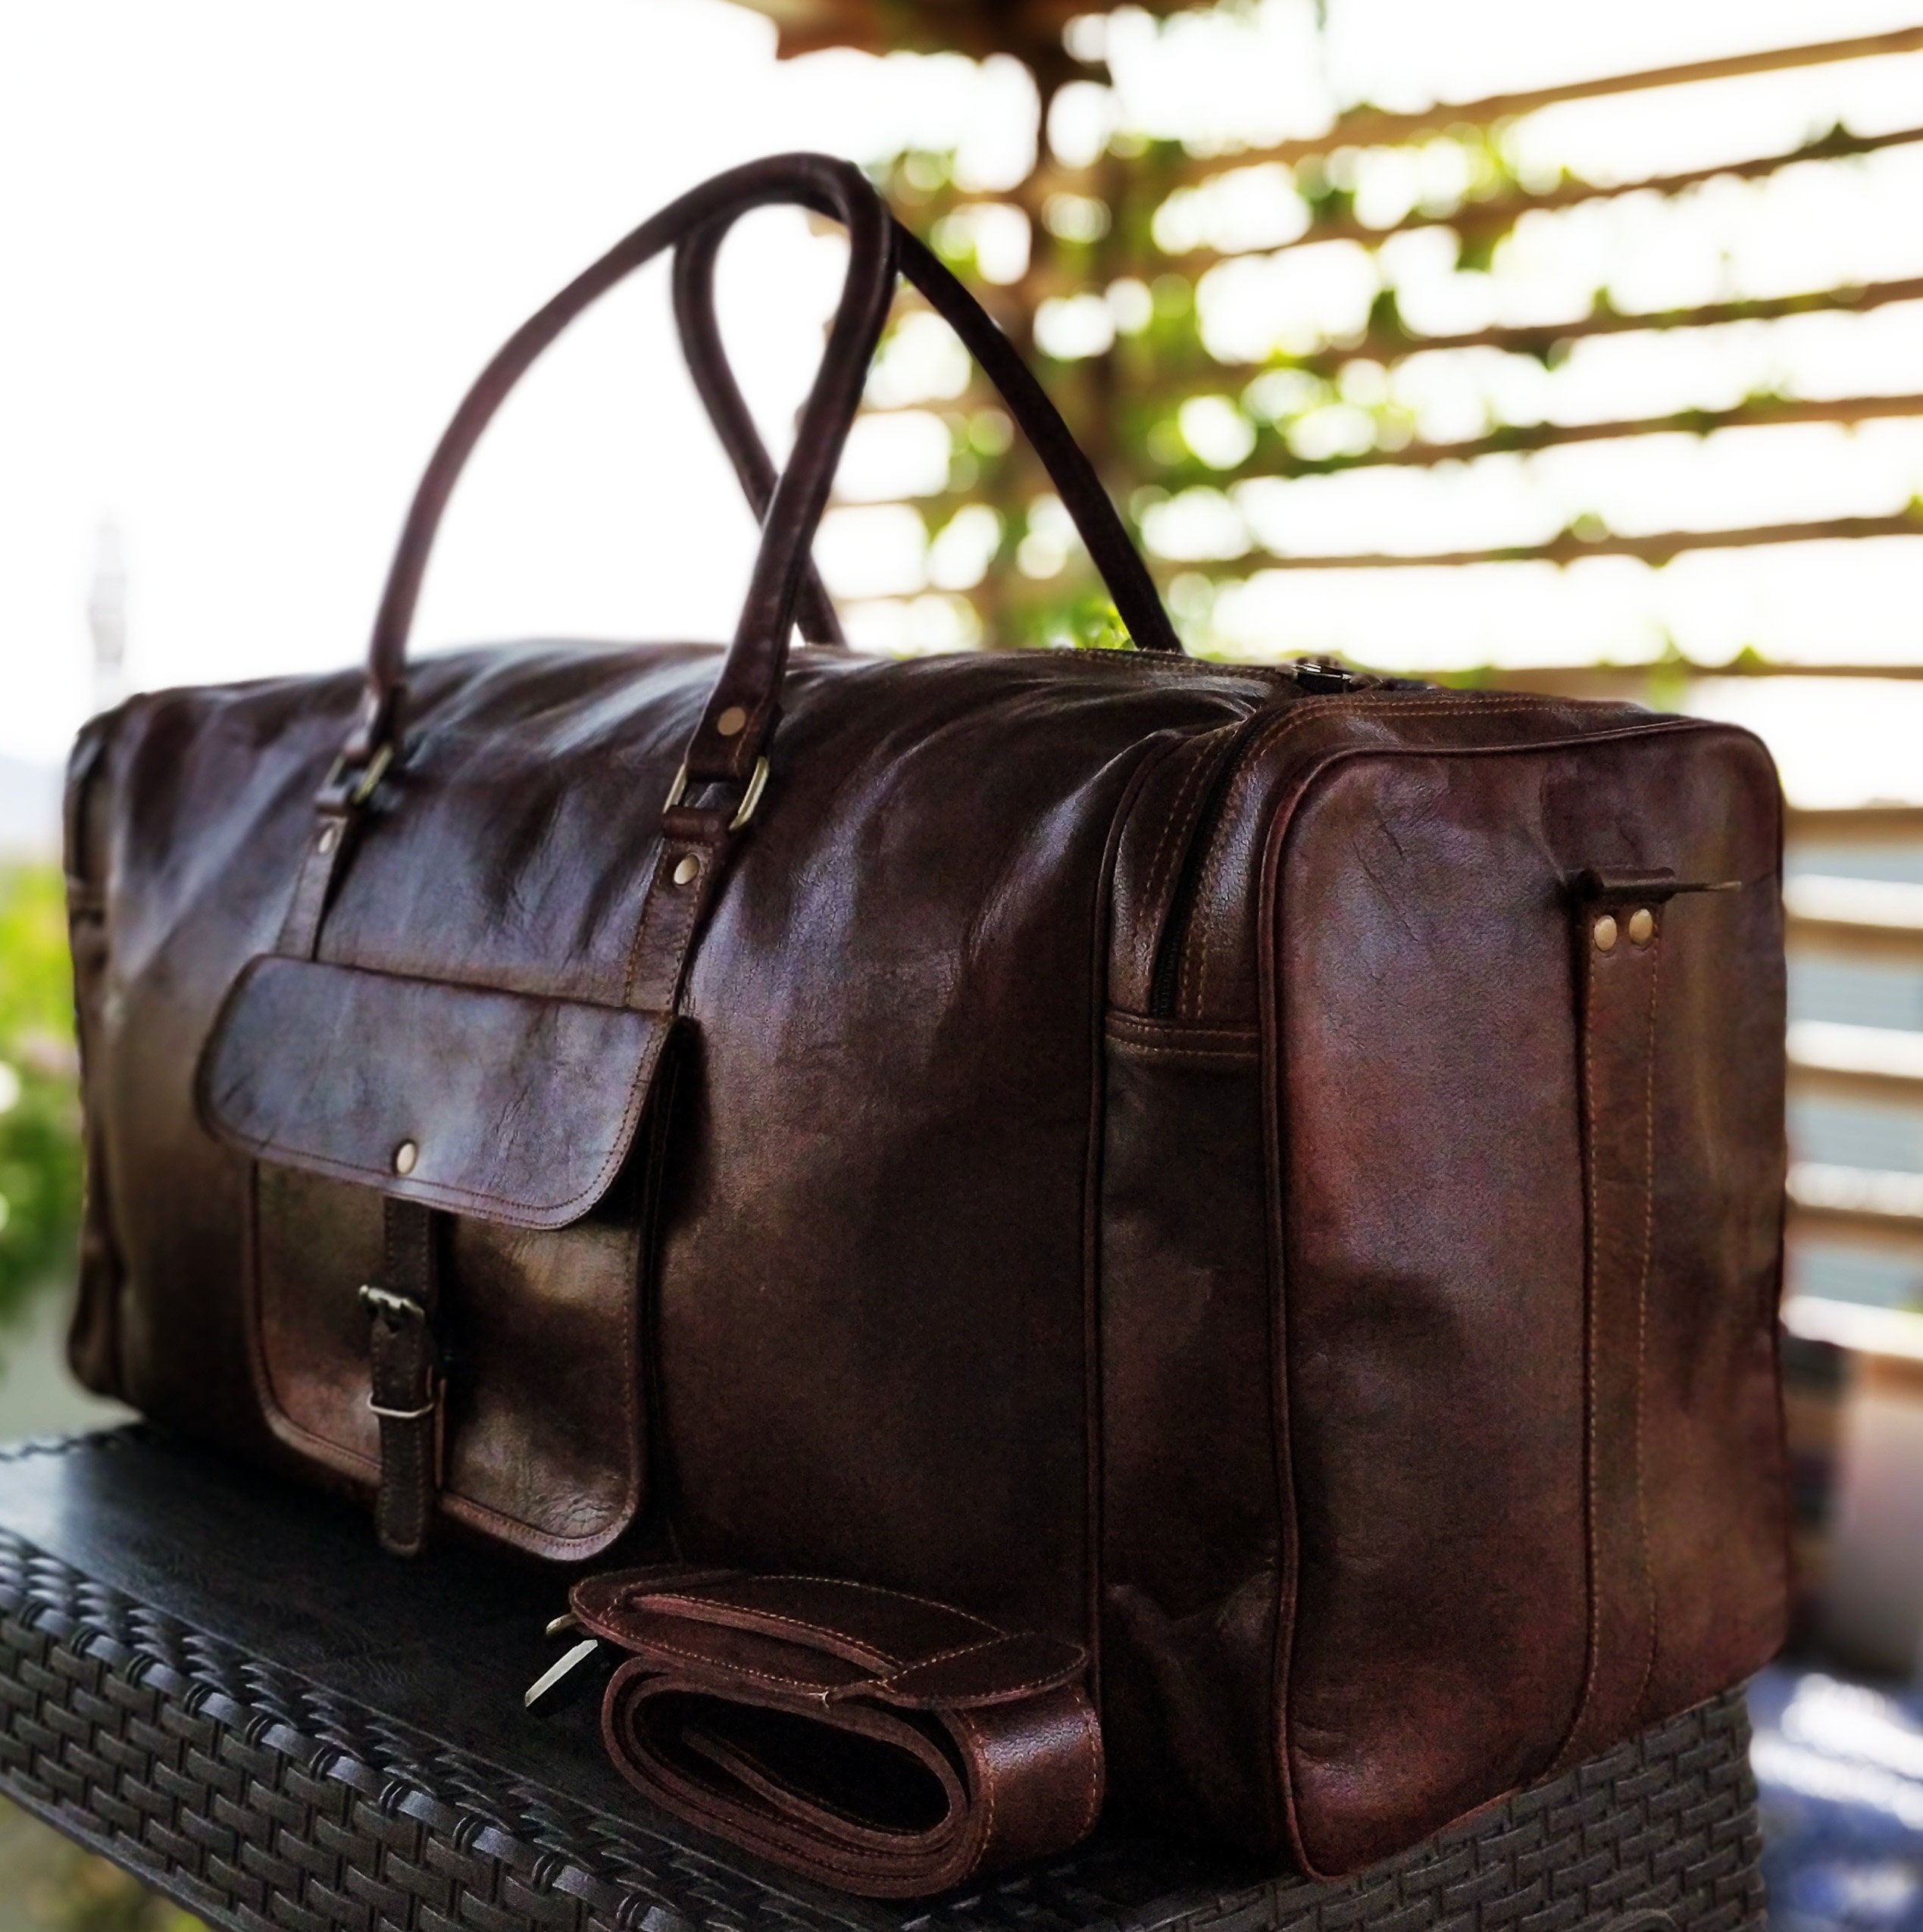 24 Leather Duffle Bag Travel Carry-on Luggage Overnight | Etsy